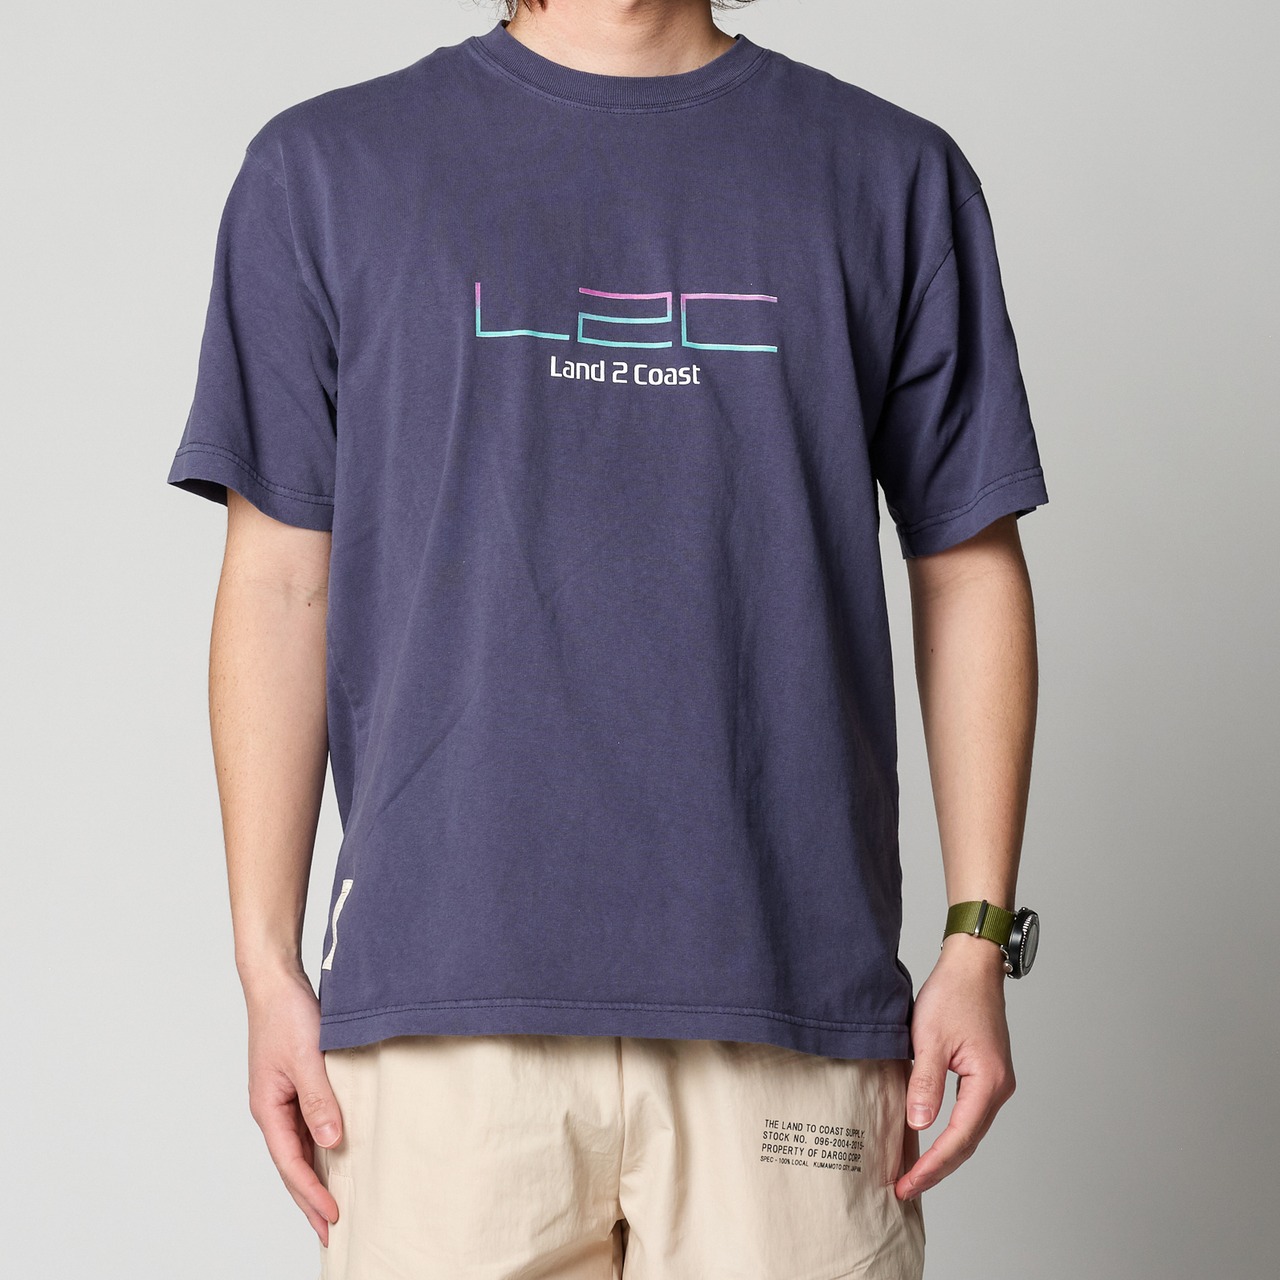 【DARGO】"Land 2 Coast"  Heavy Weight Pigment Dyed T-shirt